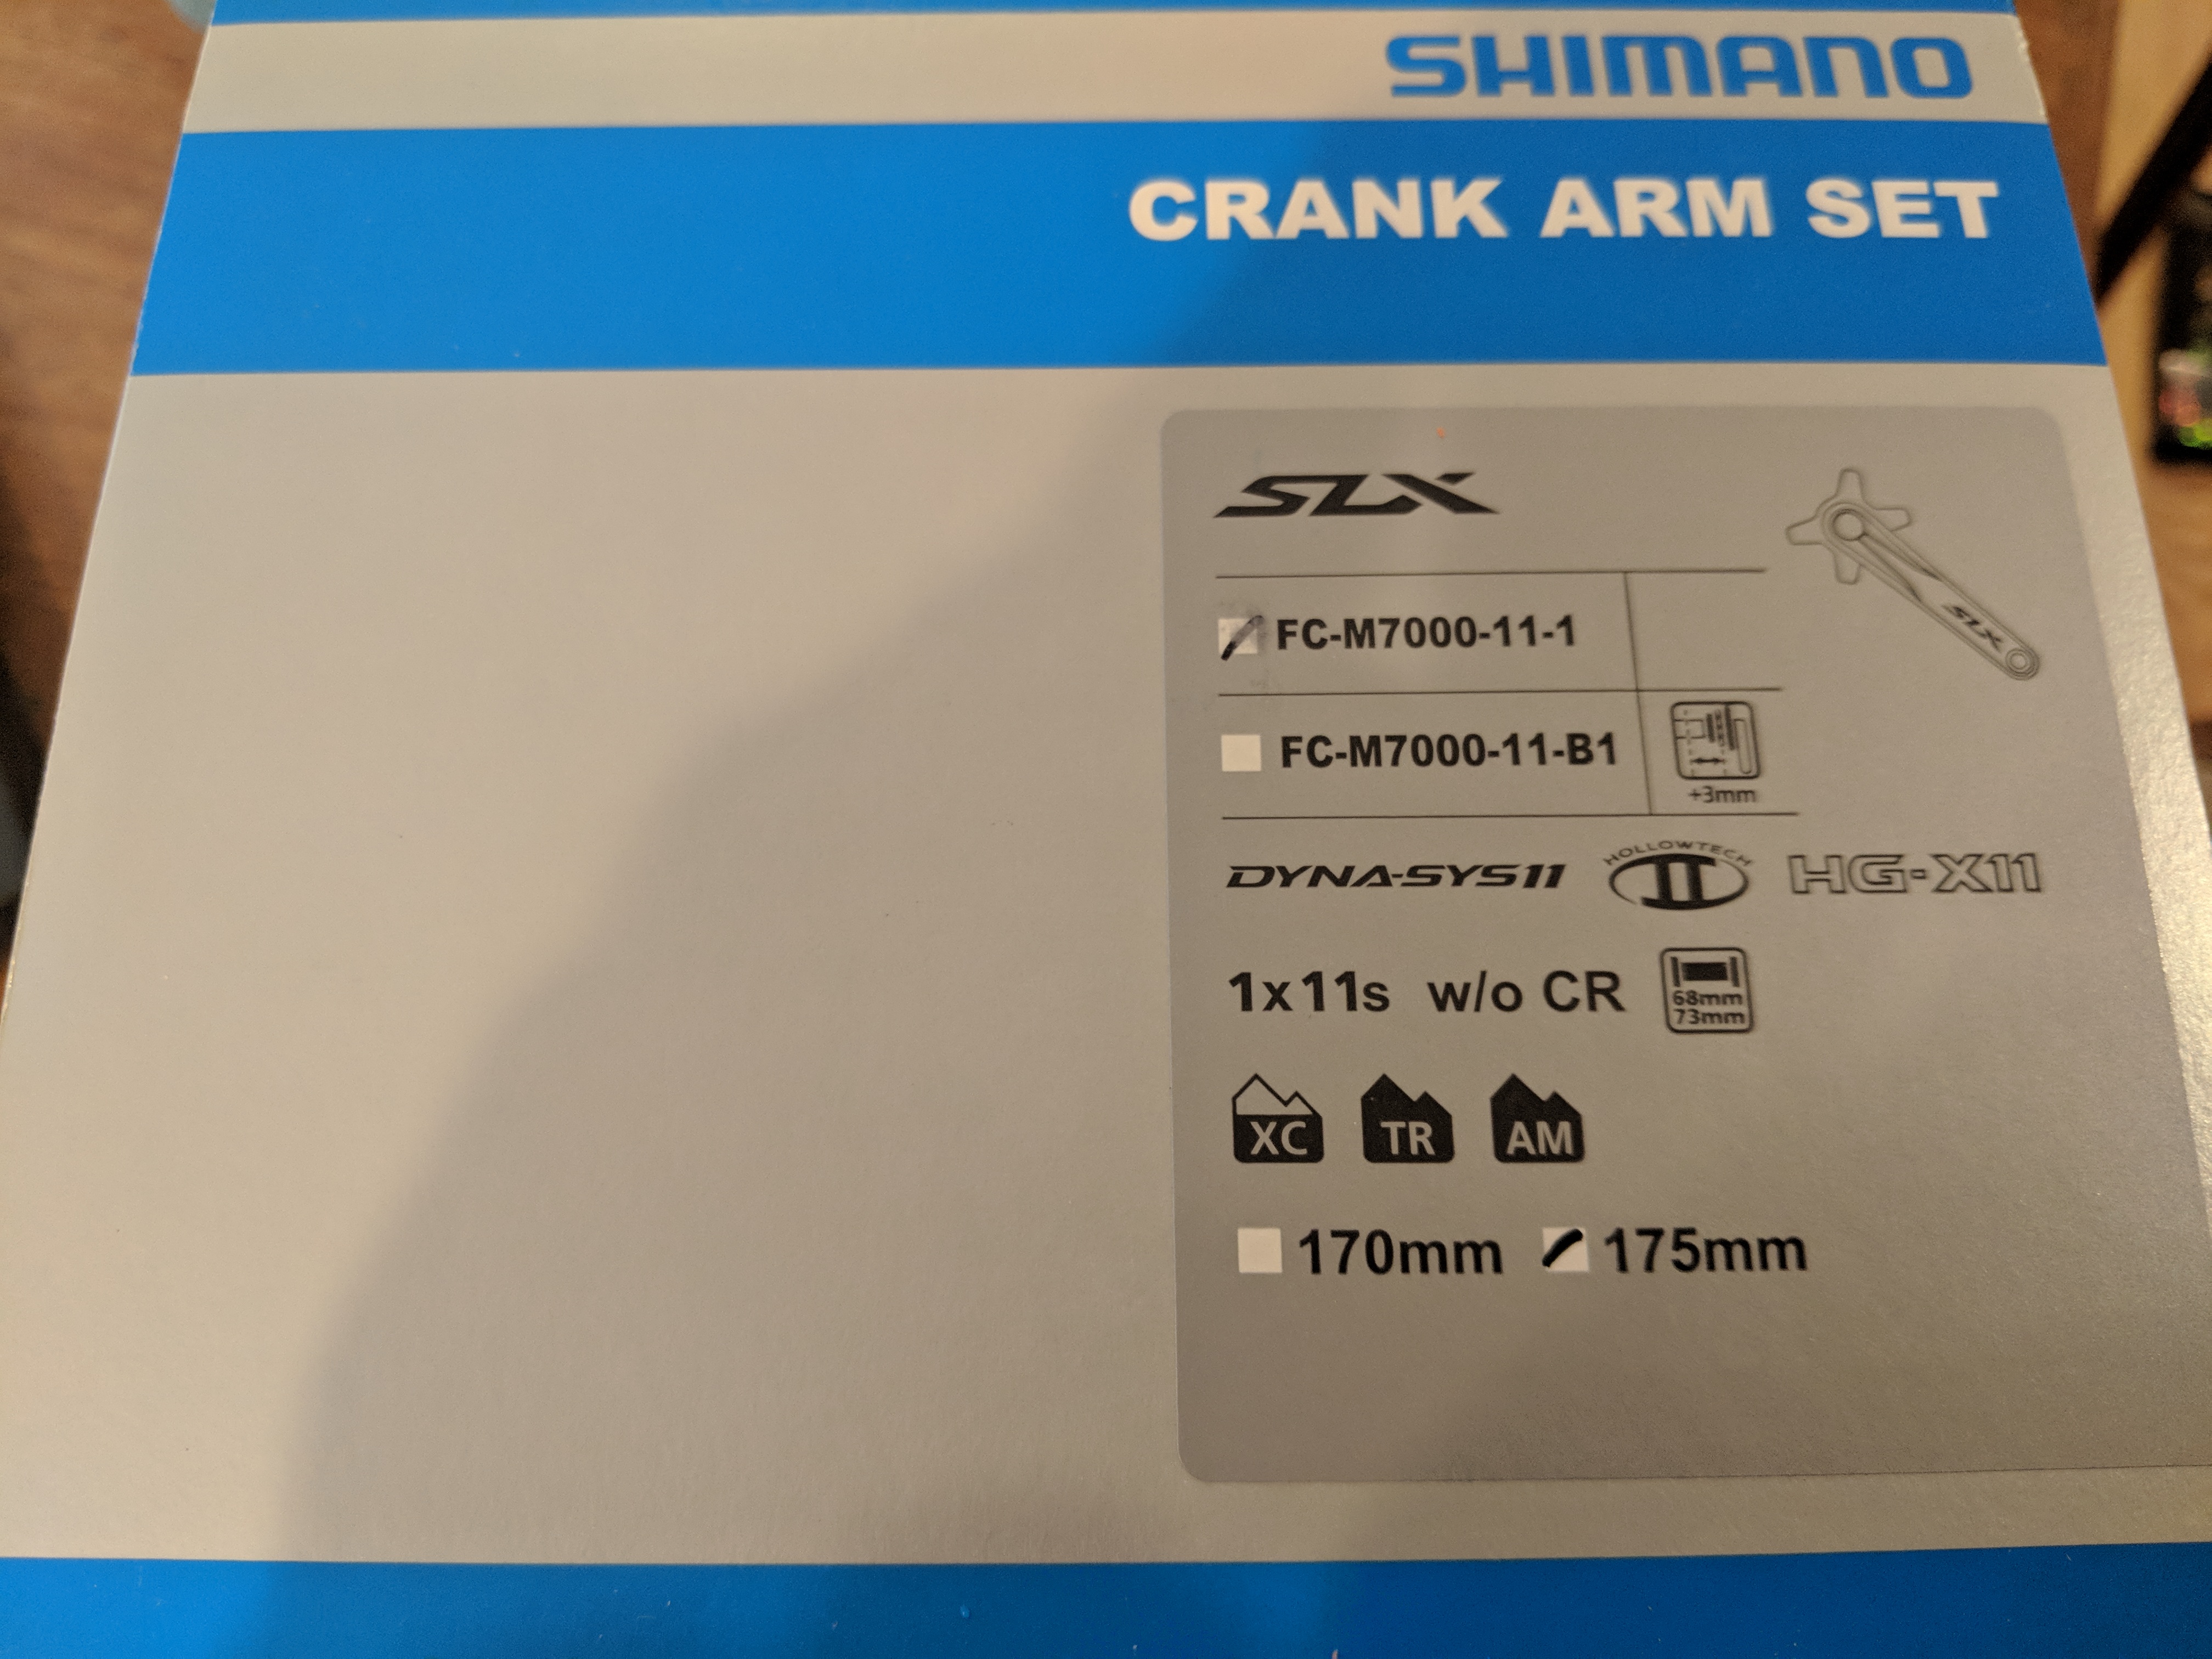 Shimano M7000 signle crankset box